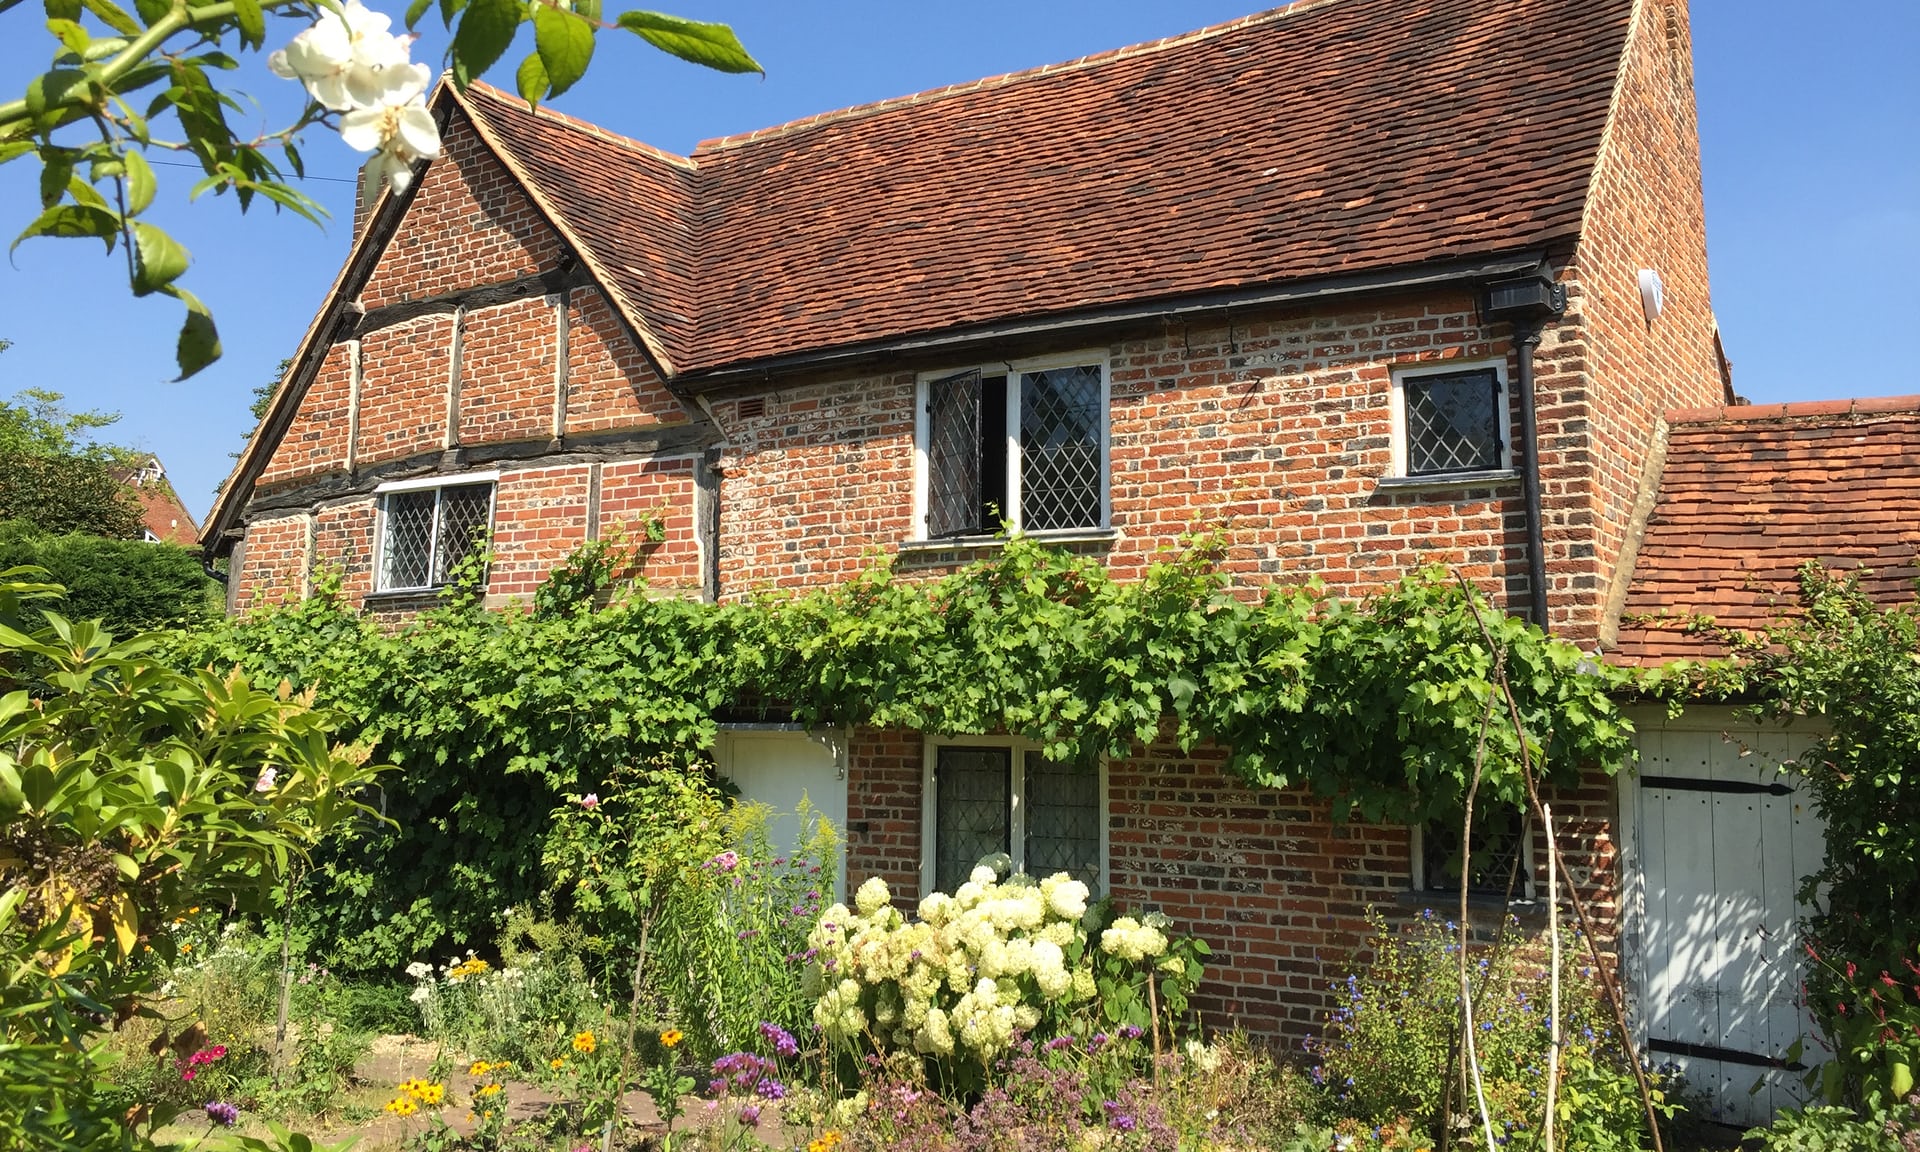 Milton's Cottage and garden